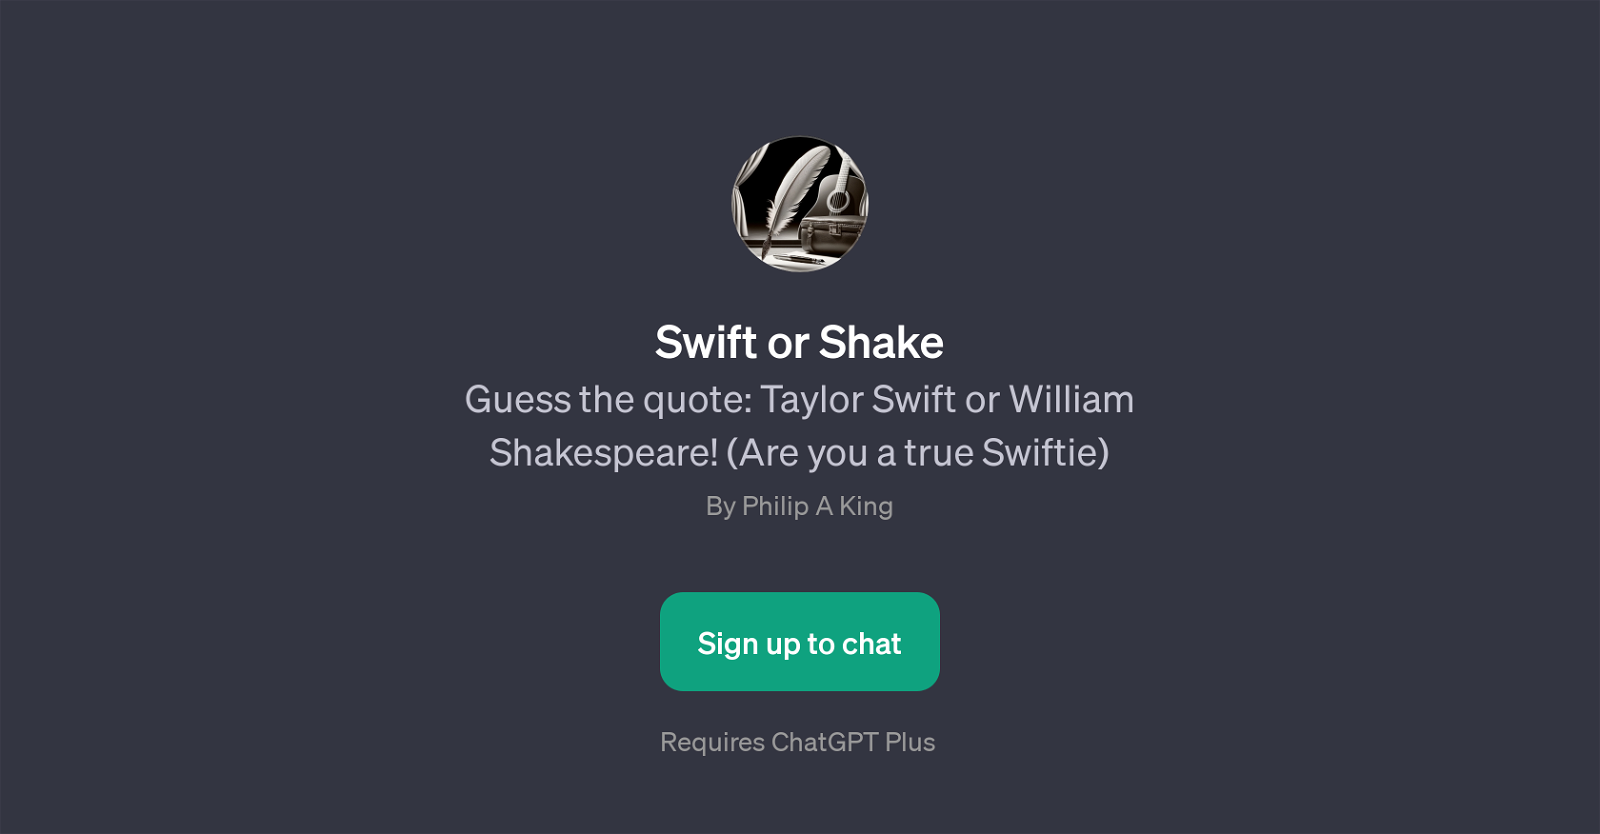 Swift or Shake website